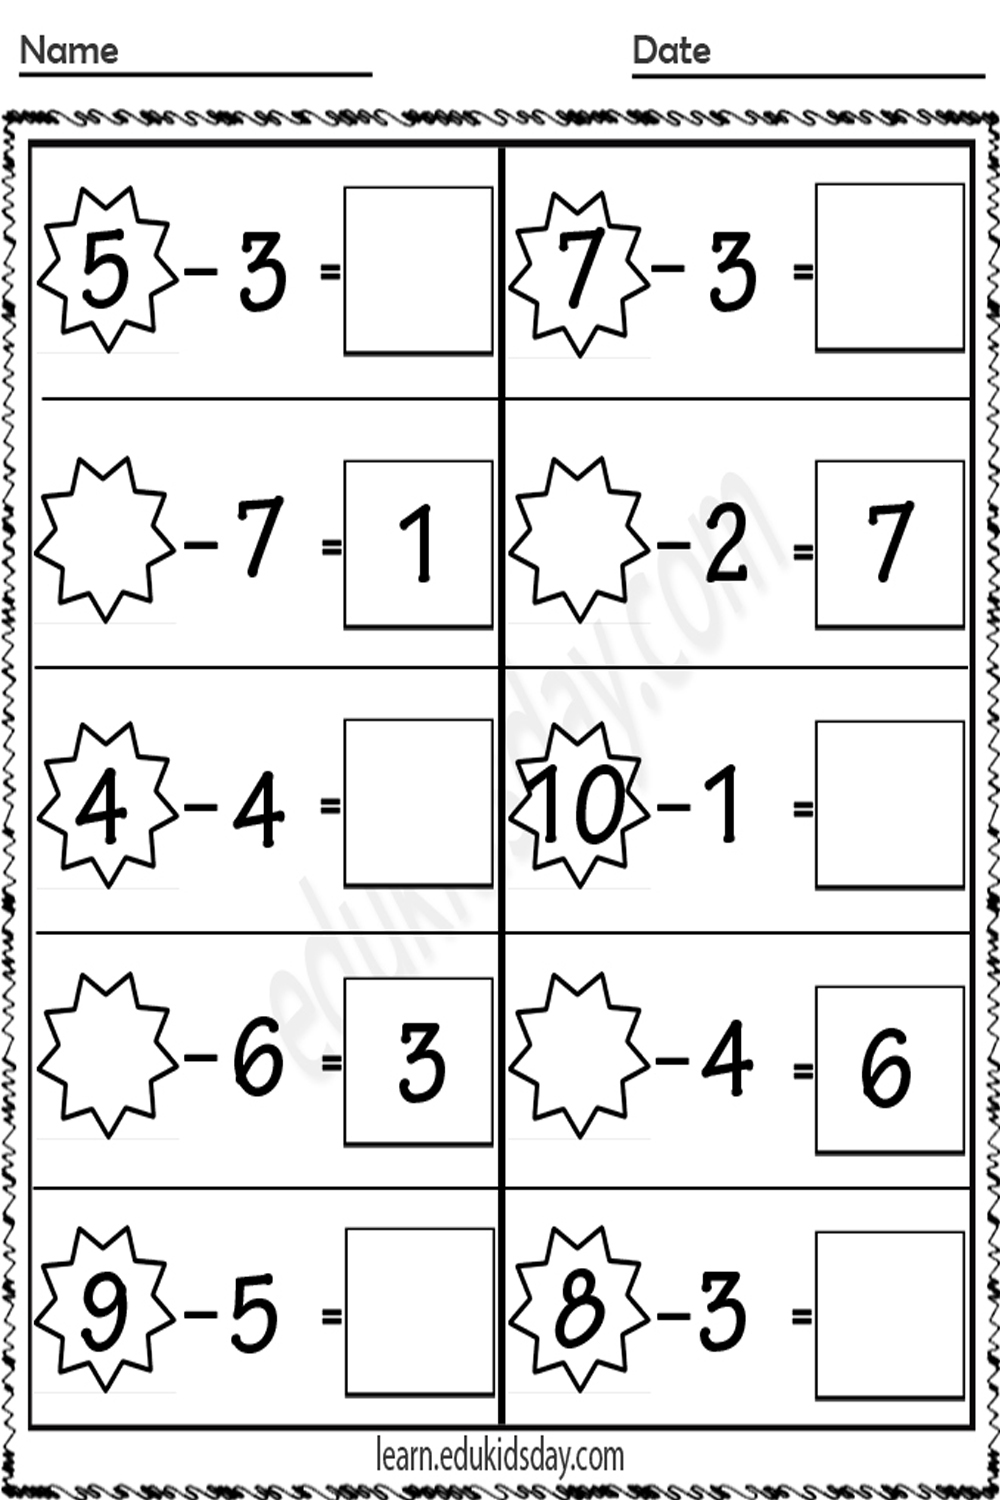 printable-math-worksheet-grade-1-addition-number-learn-edukidsday